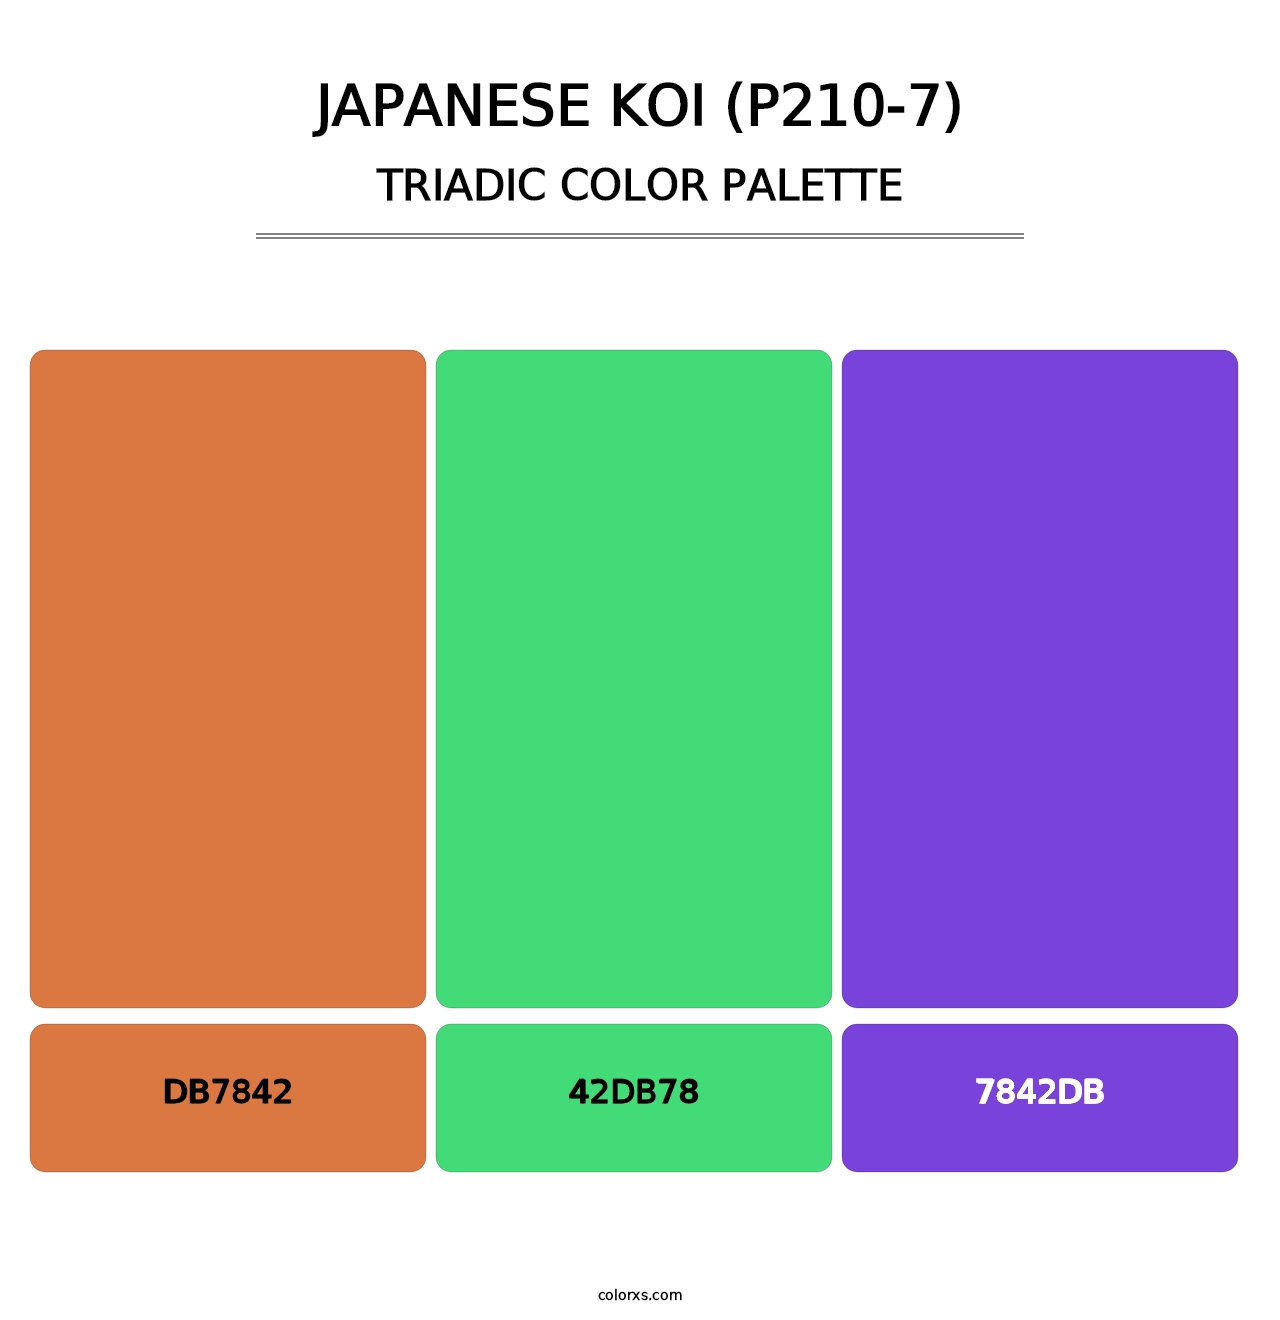 Japanese Koi (P210-7) - Triadic Color Palette